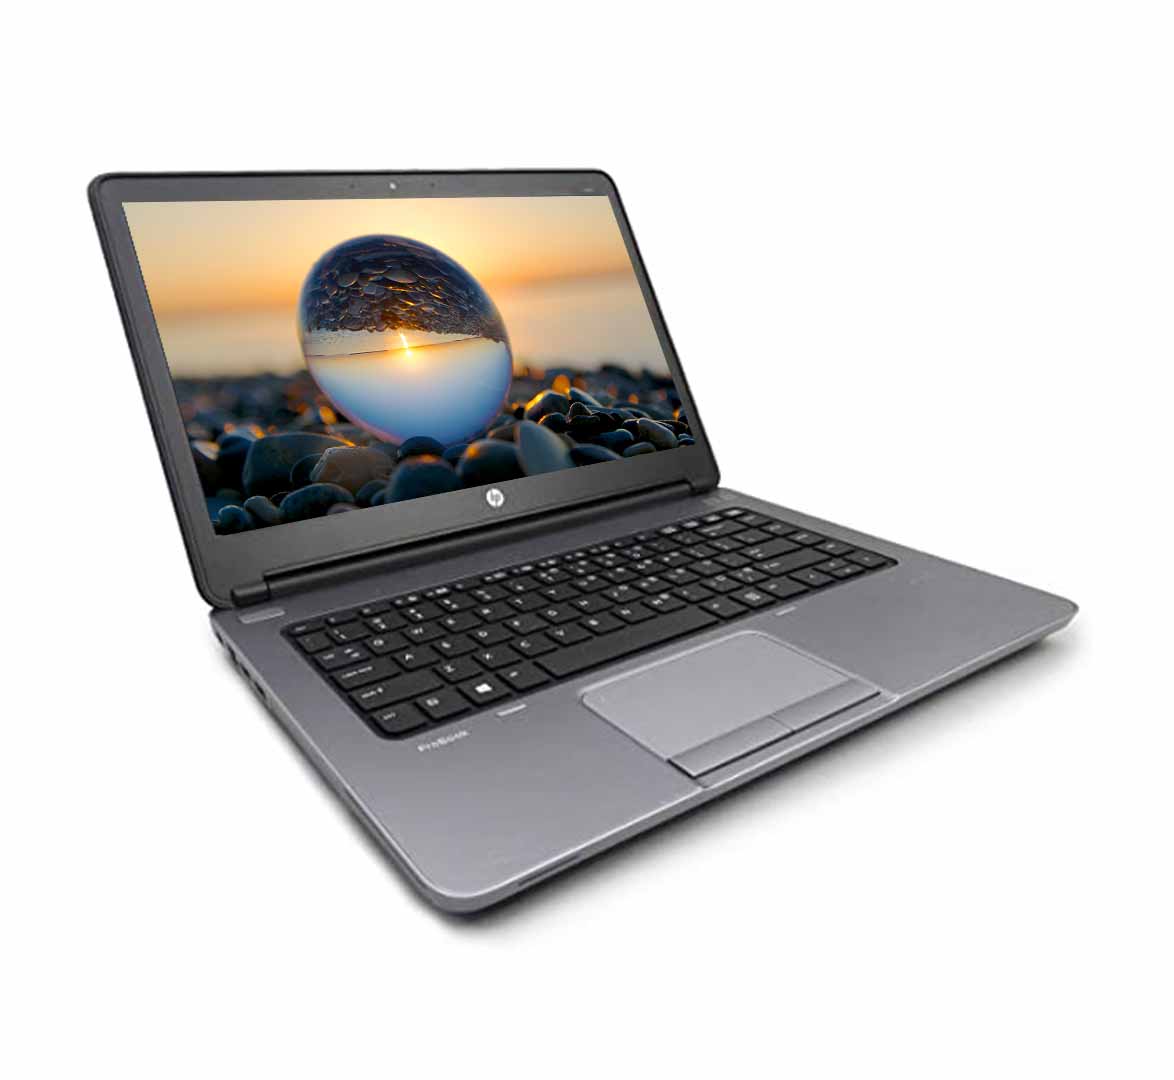 HP MT41 Business Laptop, AMD A4 Series CPU, 8GB RAM, 256GB SSD Hard, 14 Inch Display, AMD RADEON 7420G, Win 10 Pro